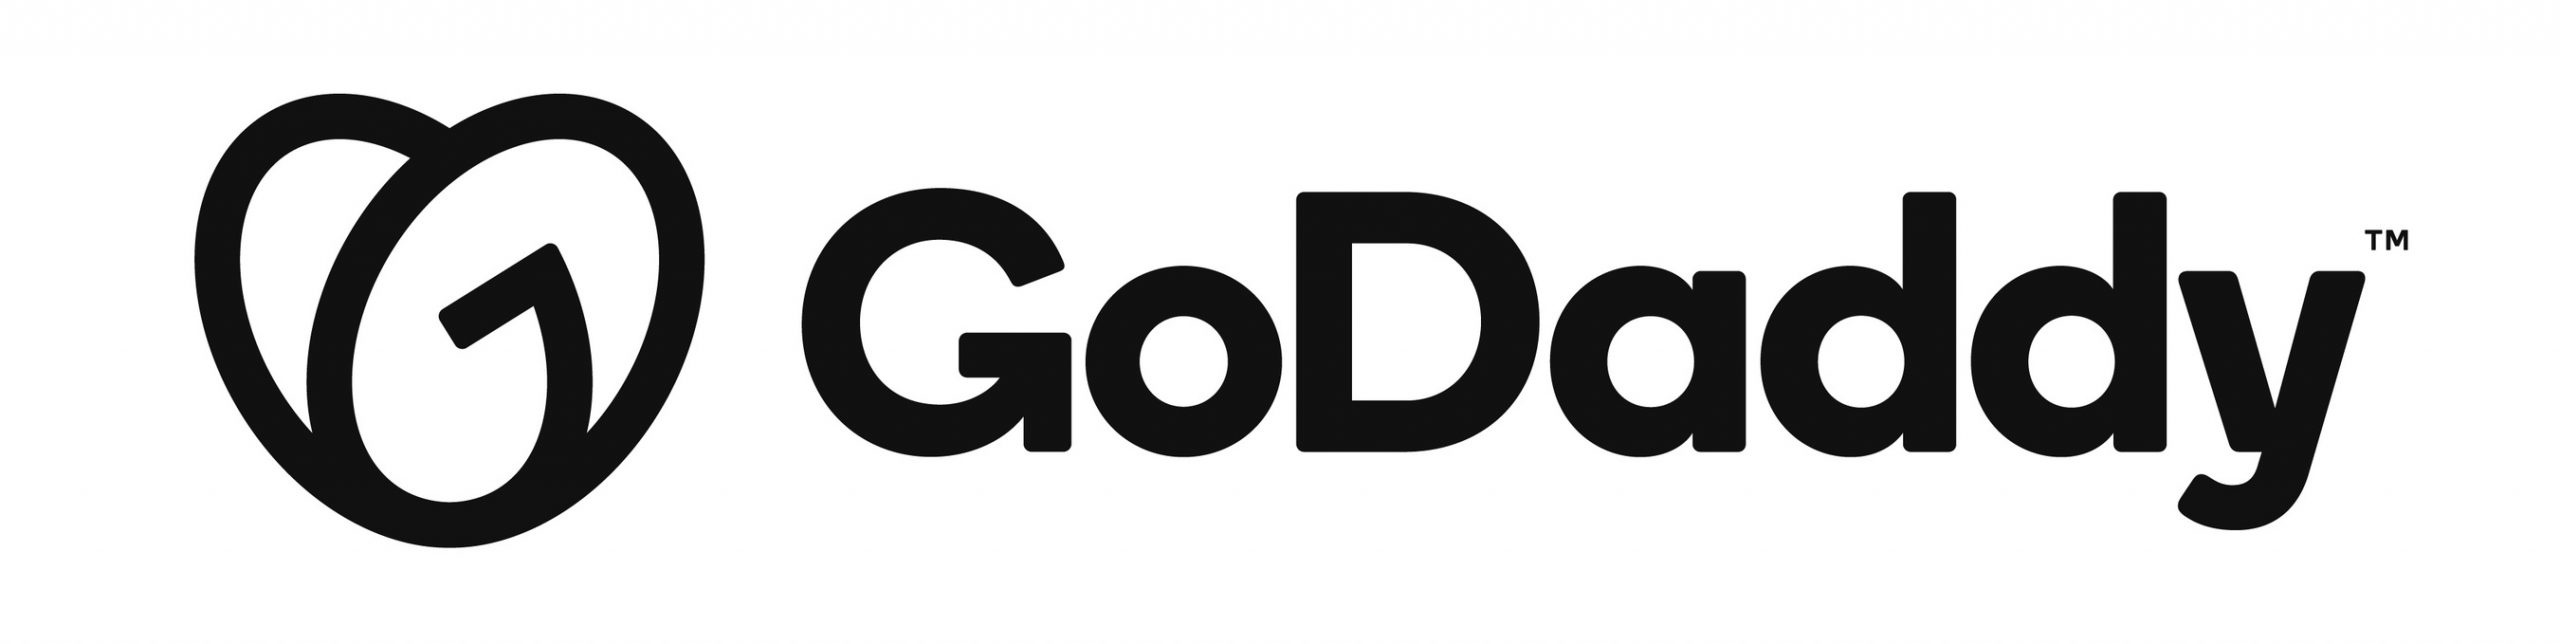 Godaddy-New-Logo-scaled.jpg